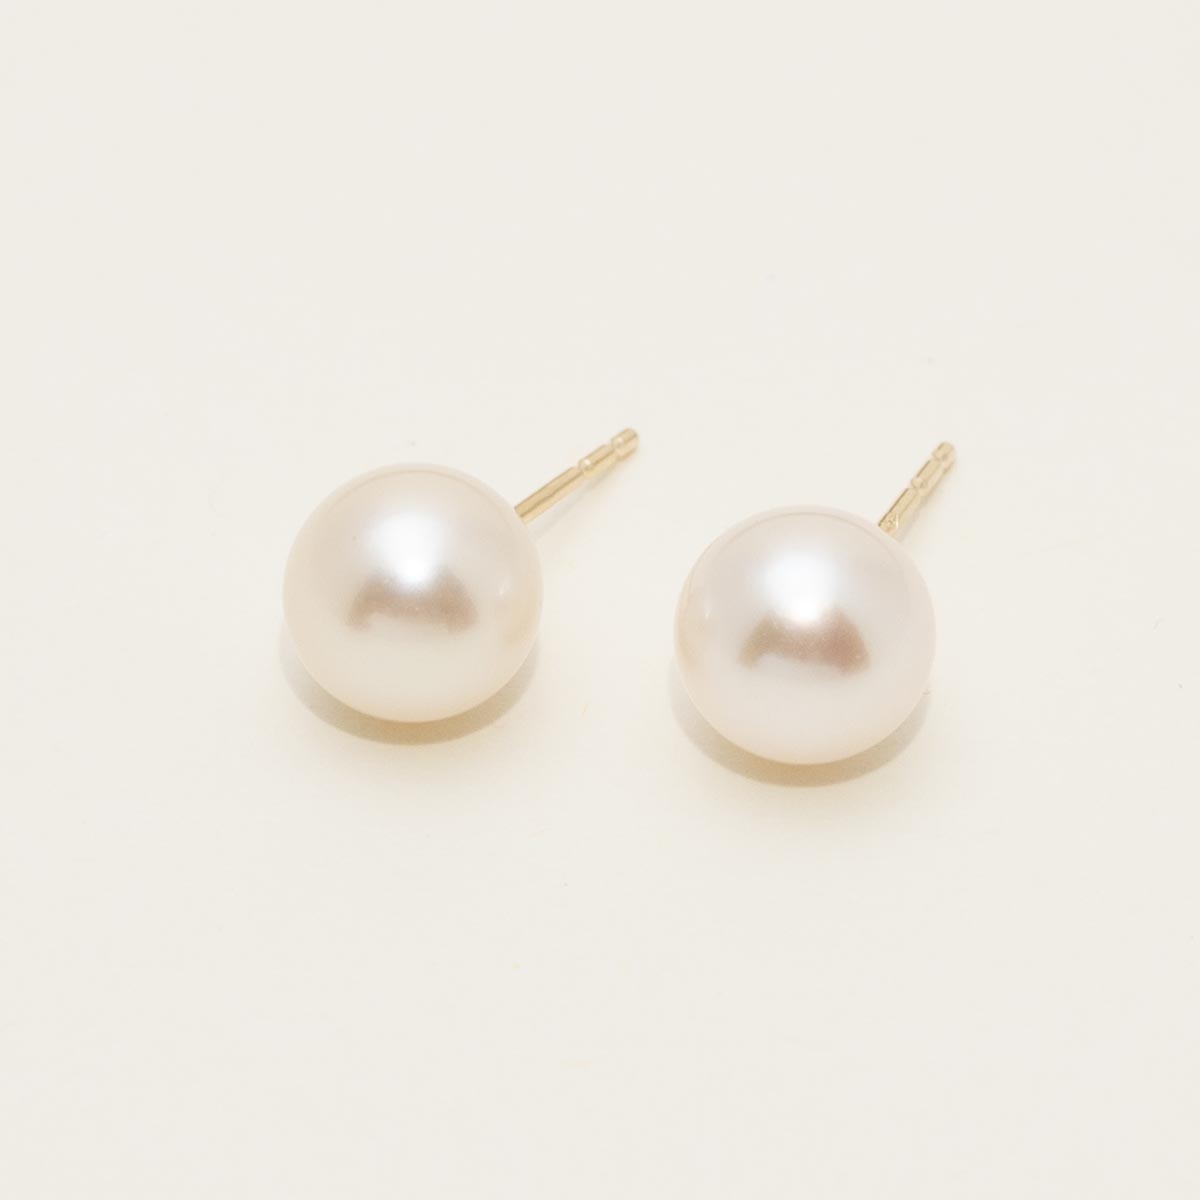 Mastoloni Cultured Akoya Pearl Stud Earrings in 14kt Yellow Gold (7-7.5mm pearls)